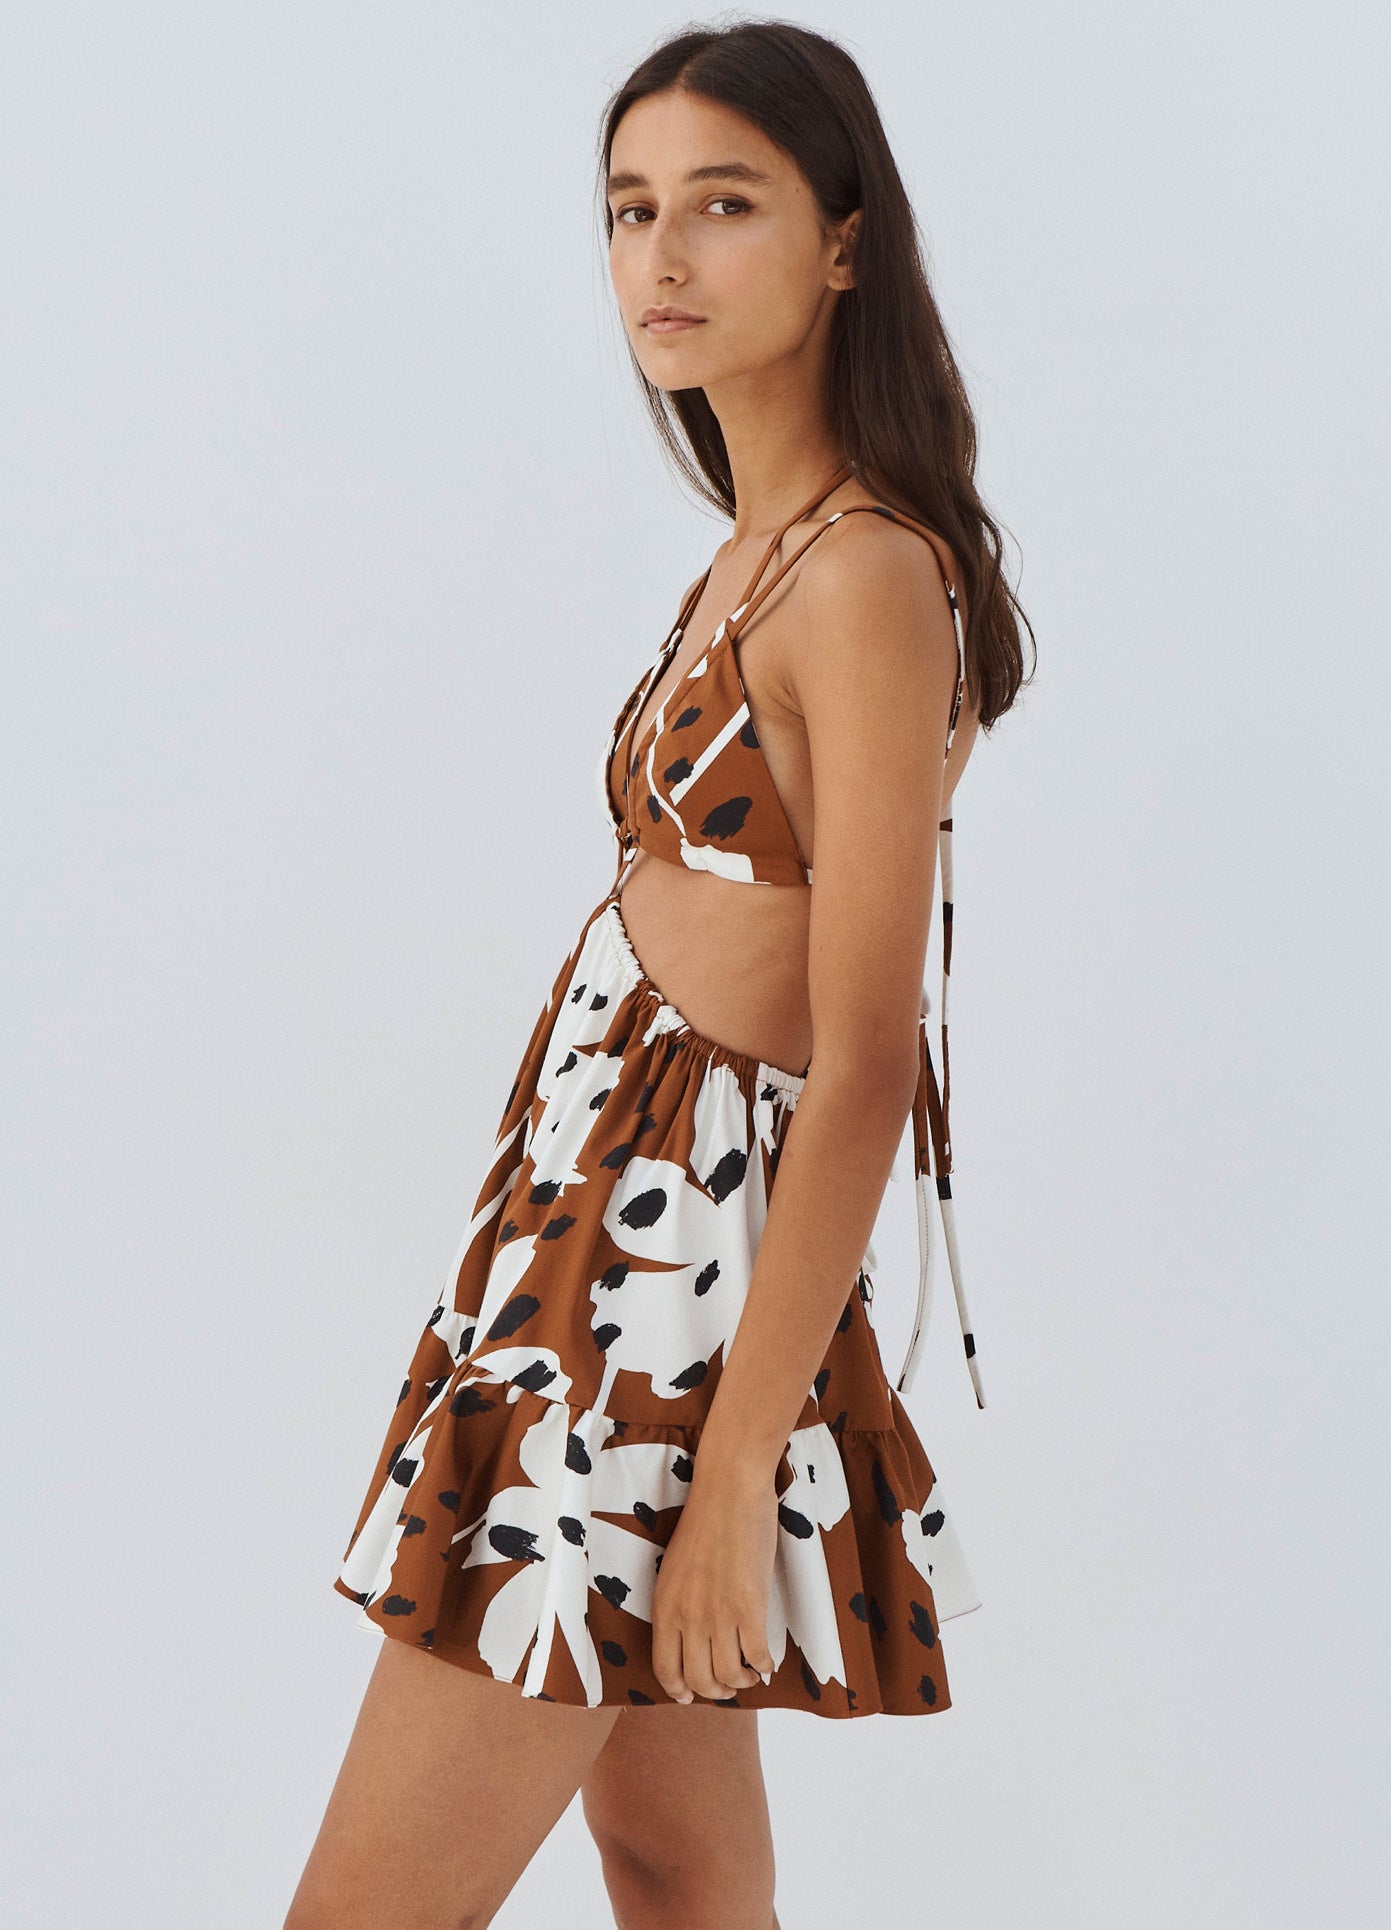 MONSE Floral Print Bra Detail Dress in Brown Multi on Model Side View